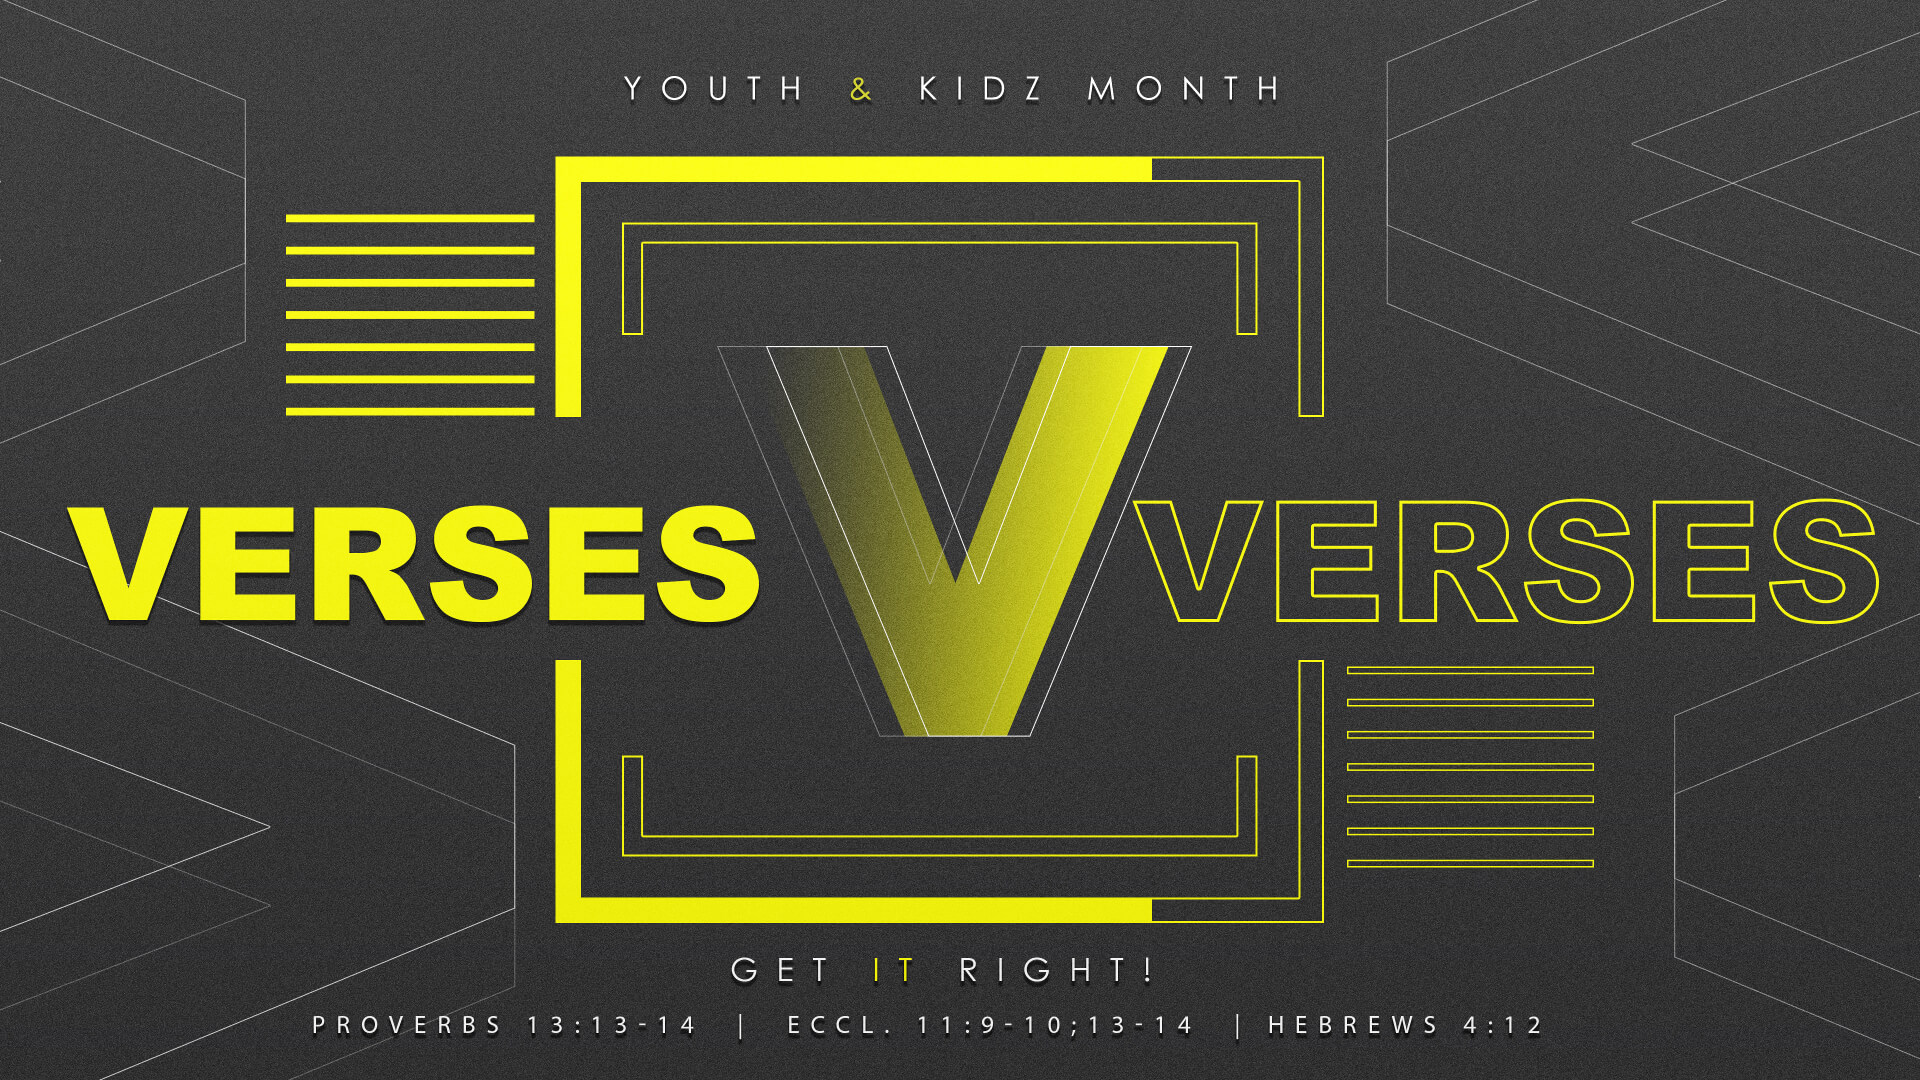 VERSES – Youth & Kidz Month head image